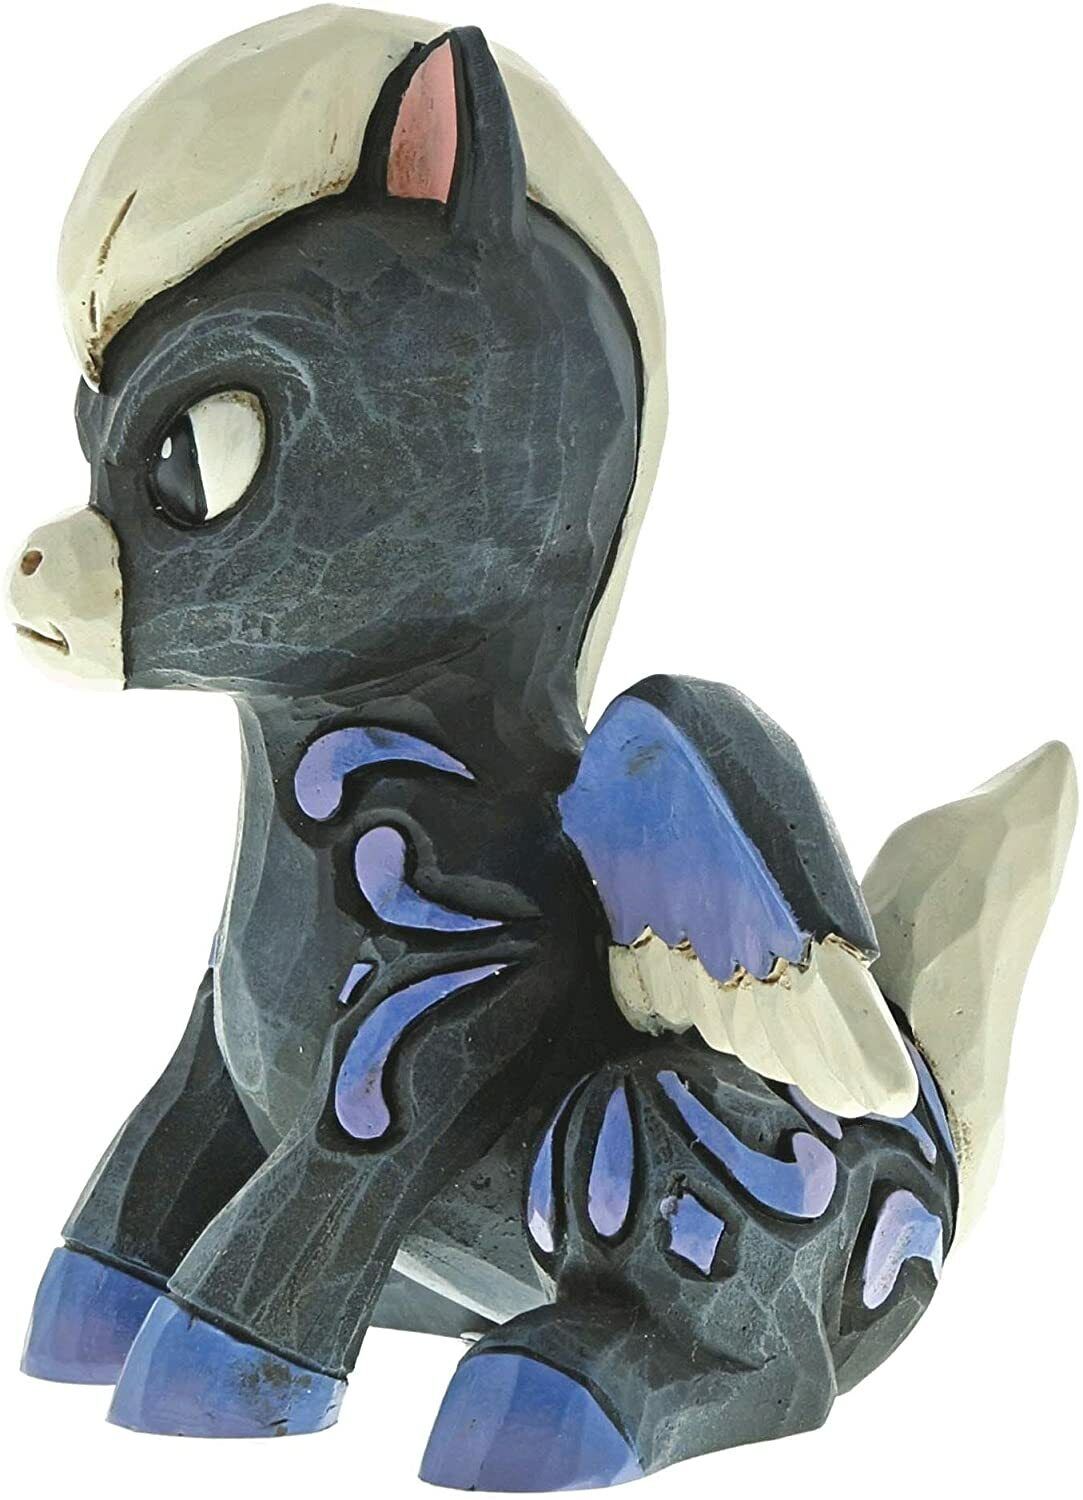 New Disney Traditions Pegasus Mini Figurine from Fantasia - Collectible